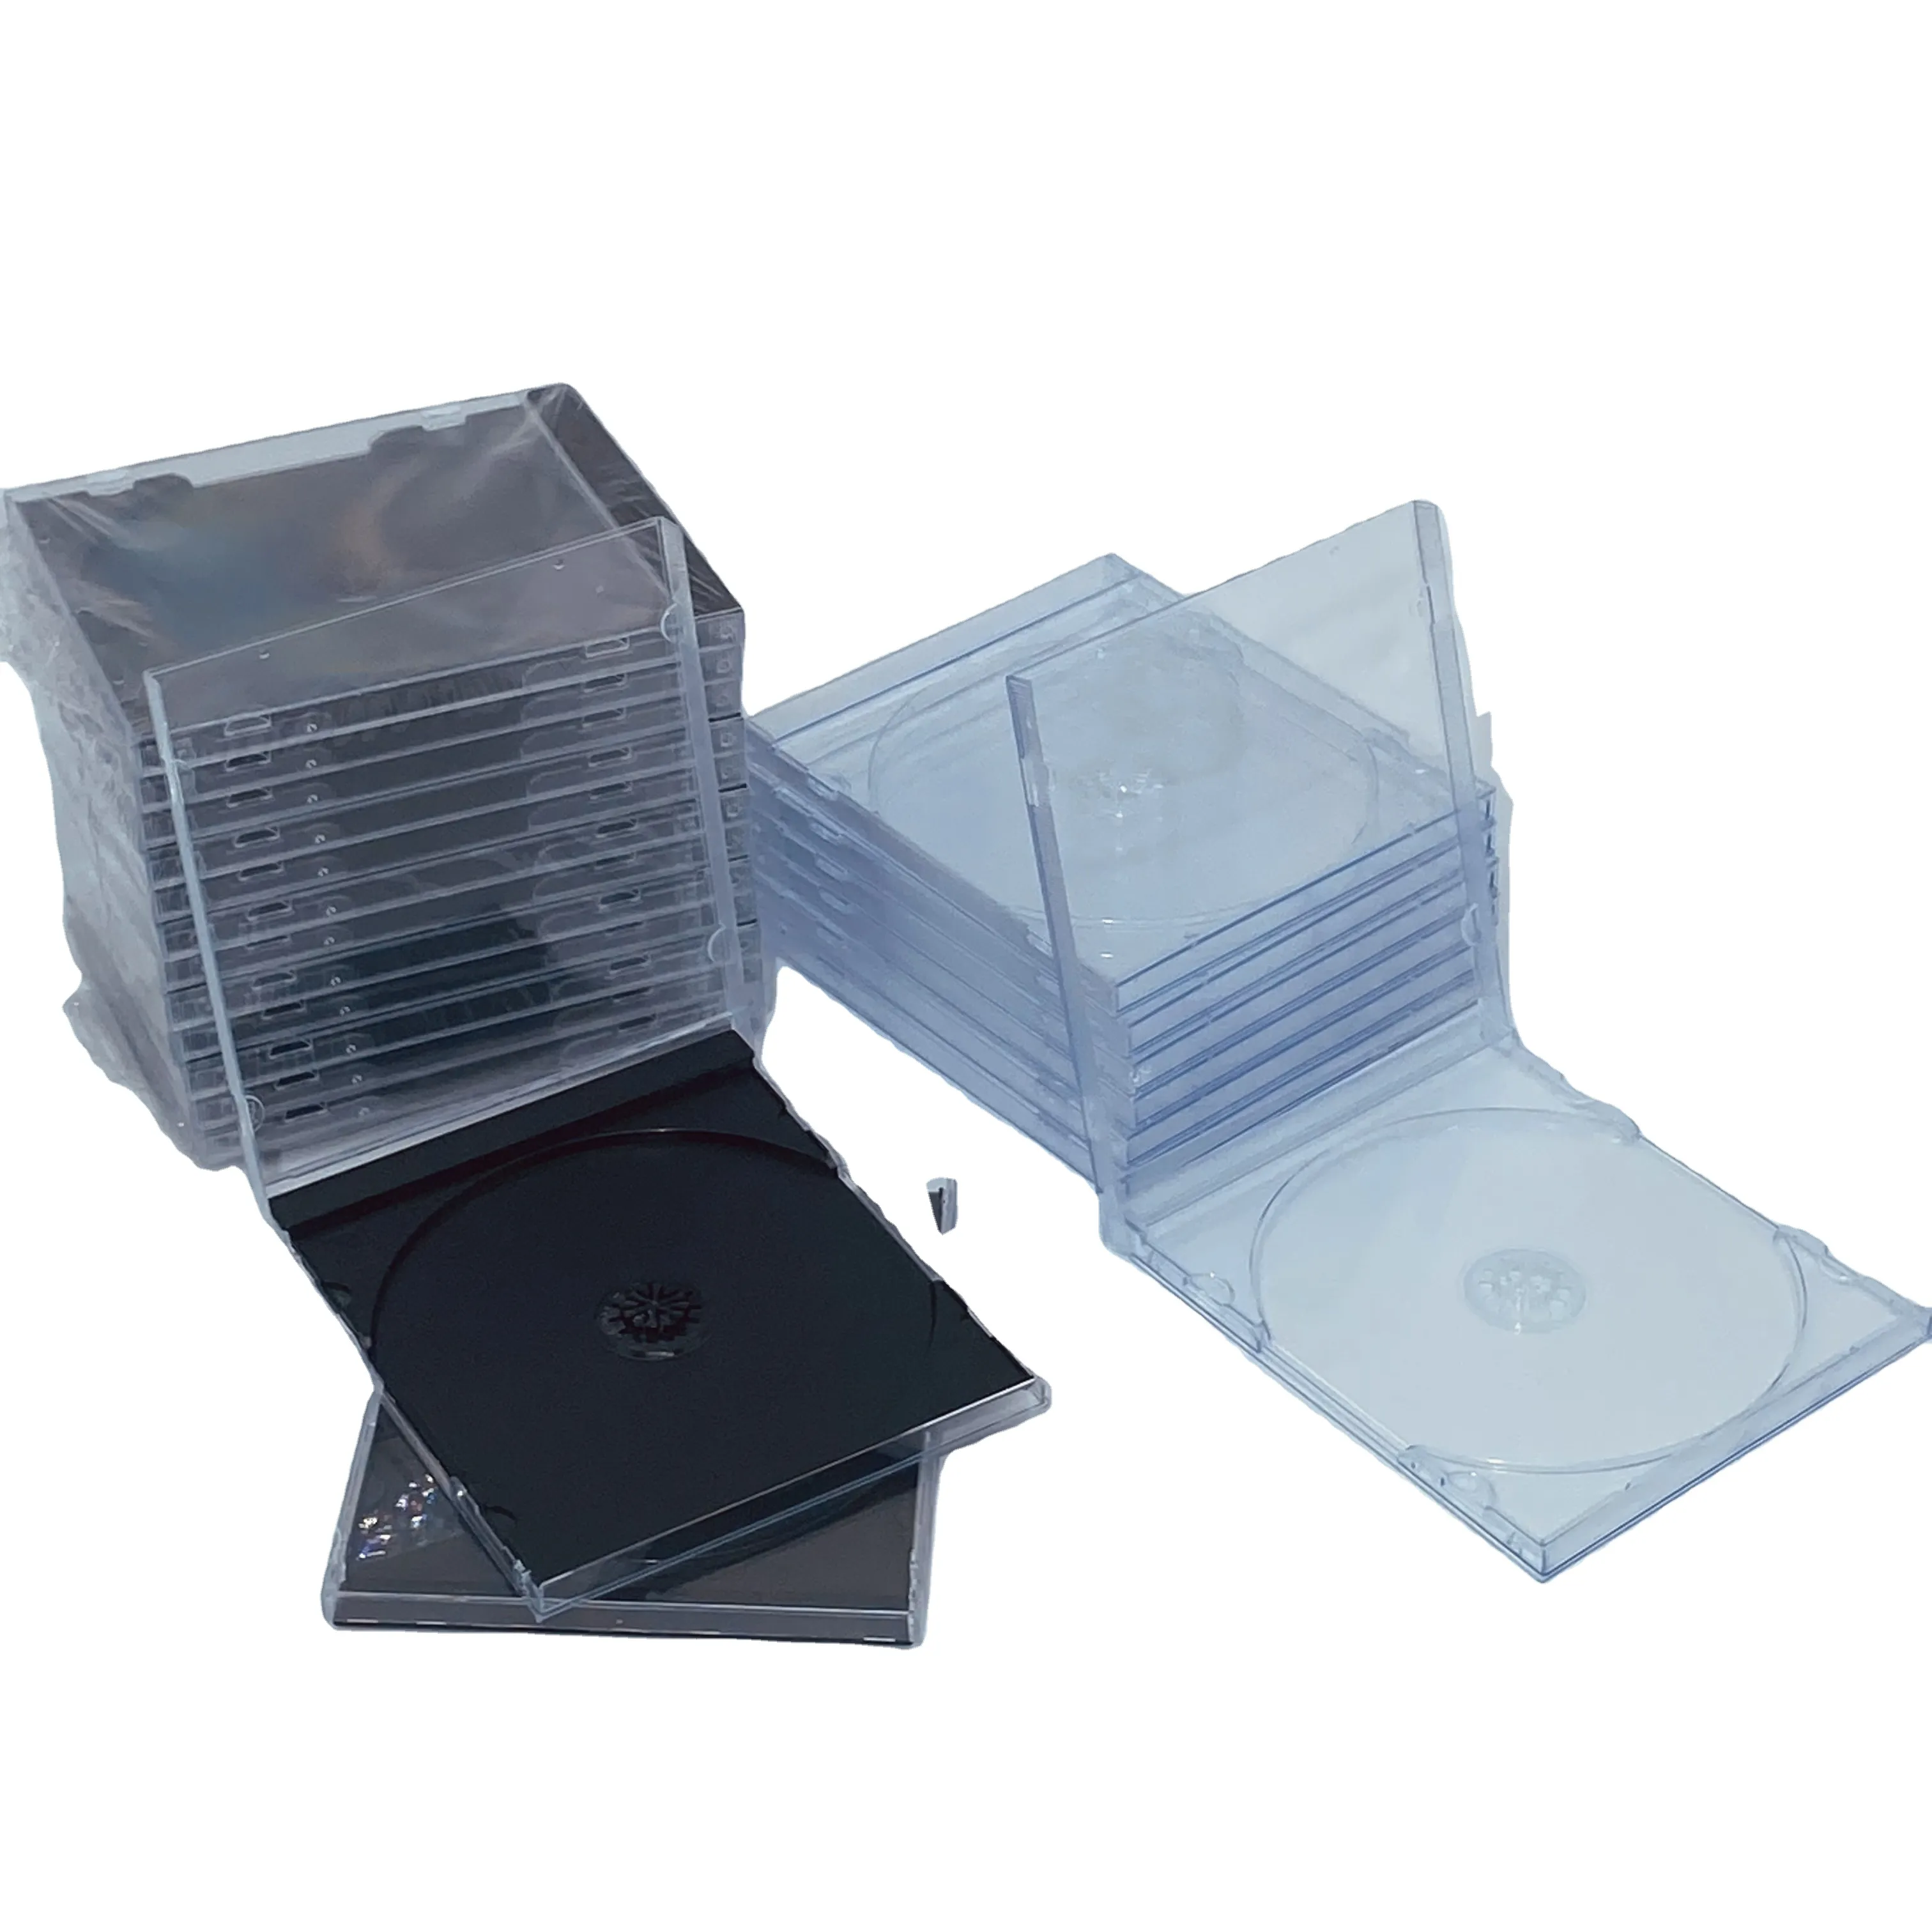 Black CD box inserts cover wedding CD box inserts hard plastic VCD box